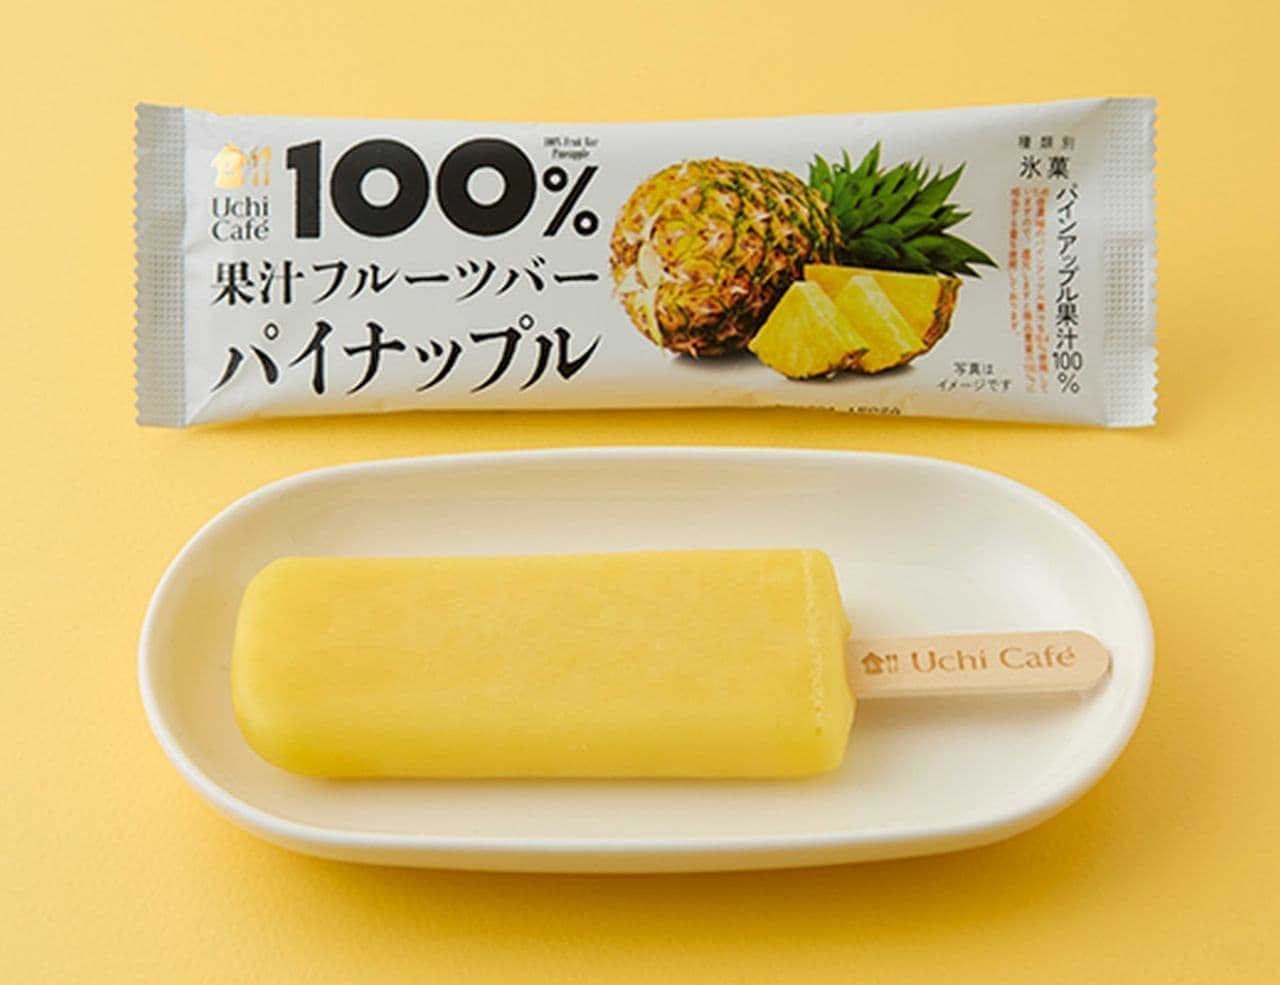 LAWSON "Uchicaffe 100% Fruit Juice Fruit Bar Pineapple